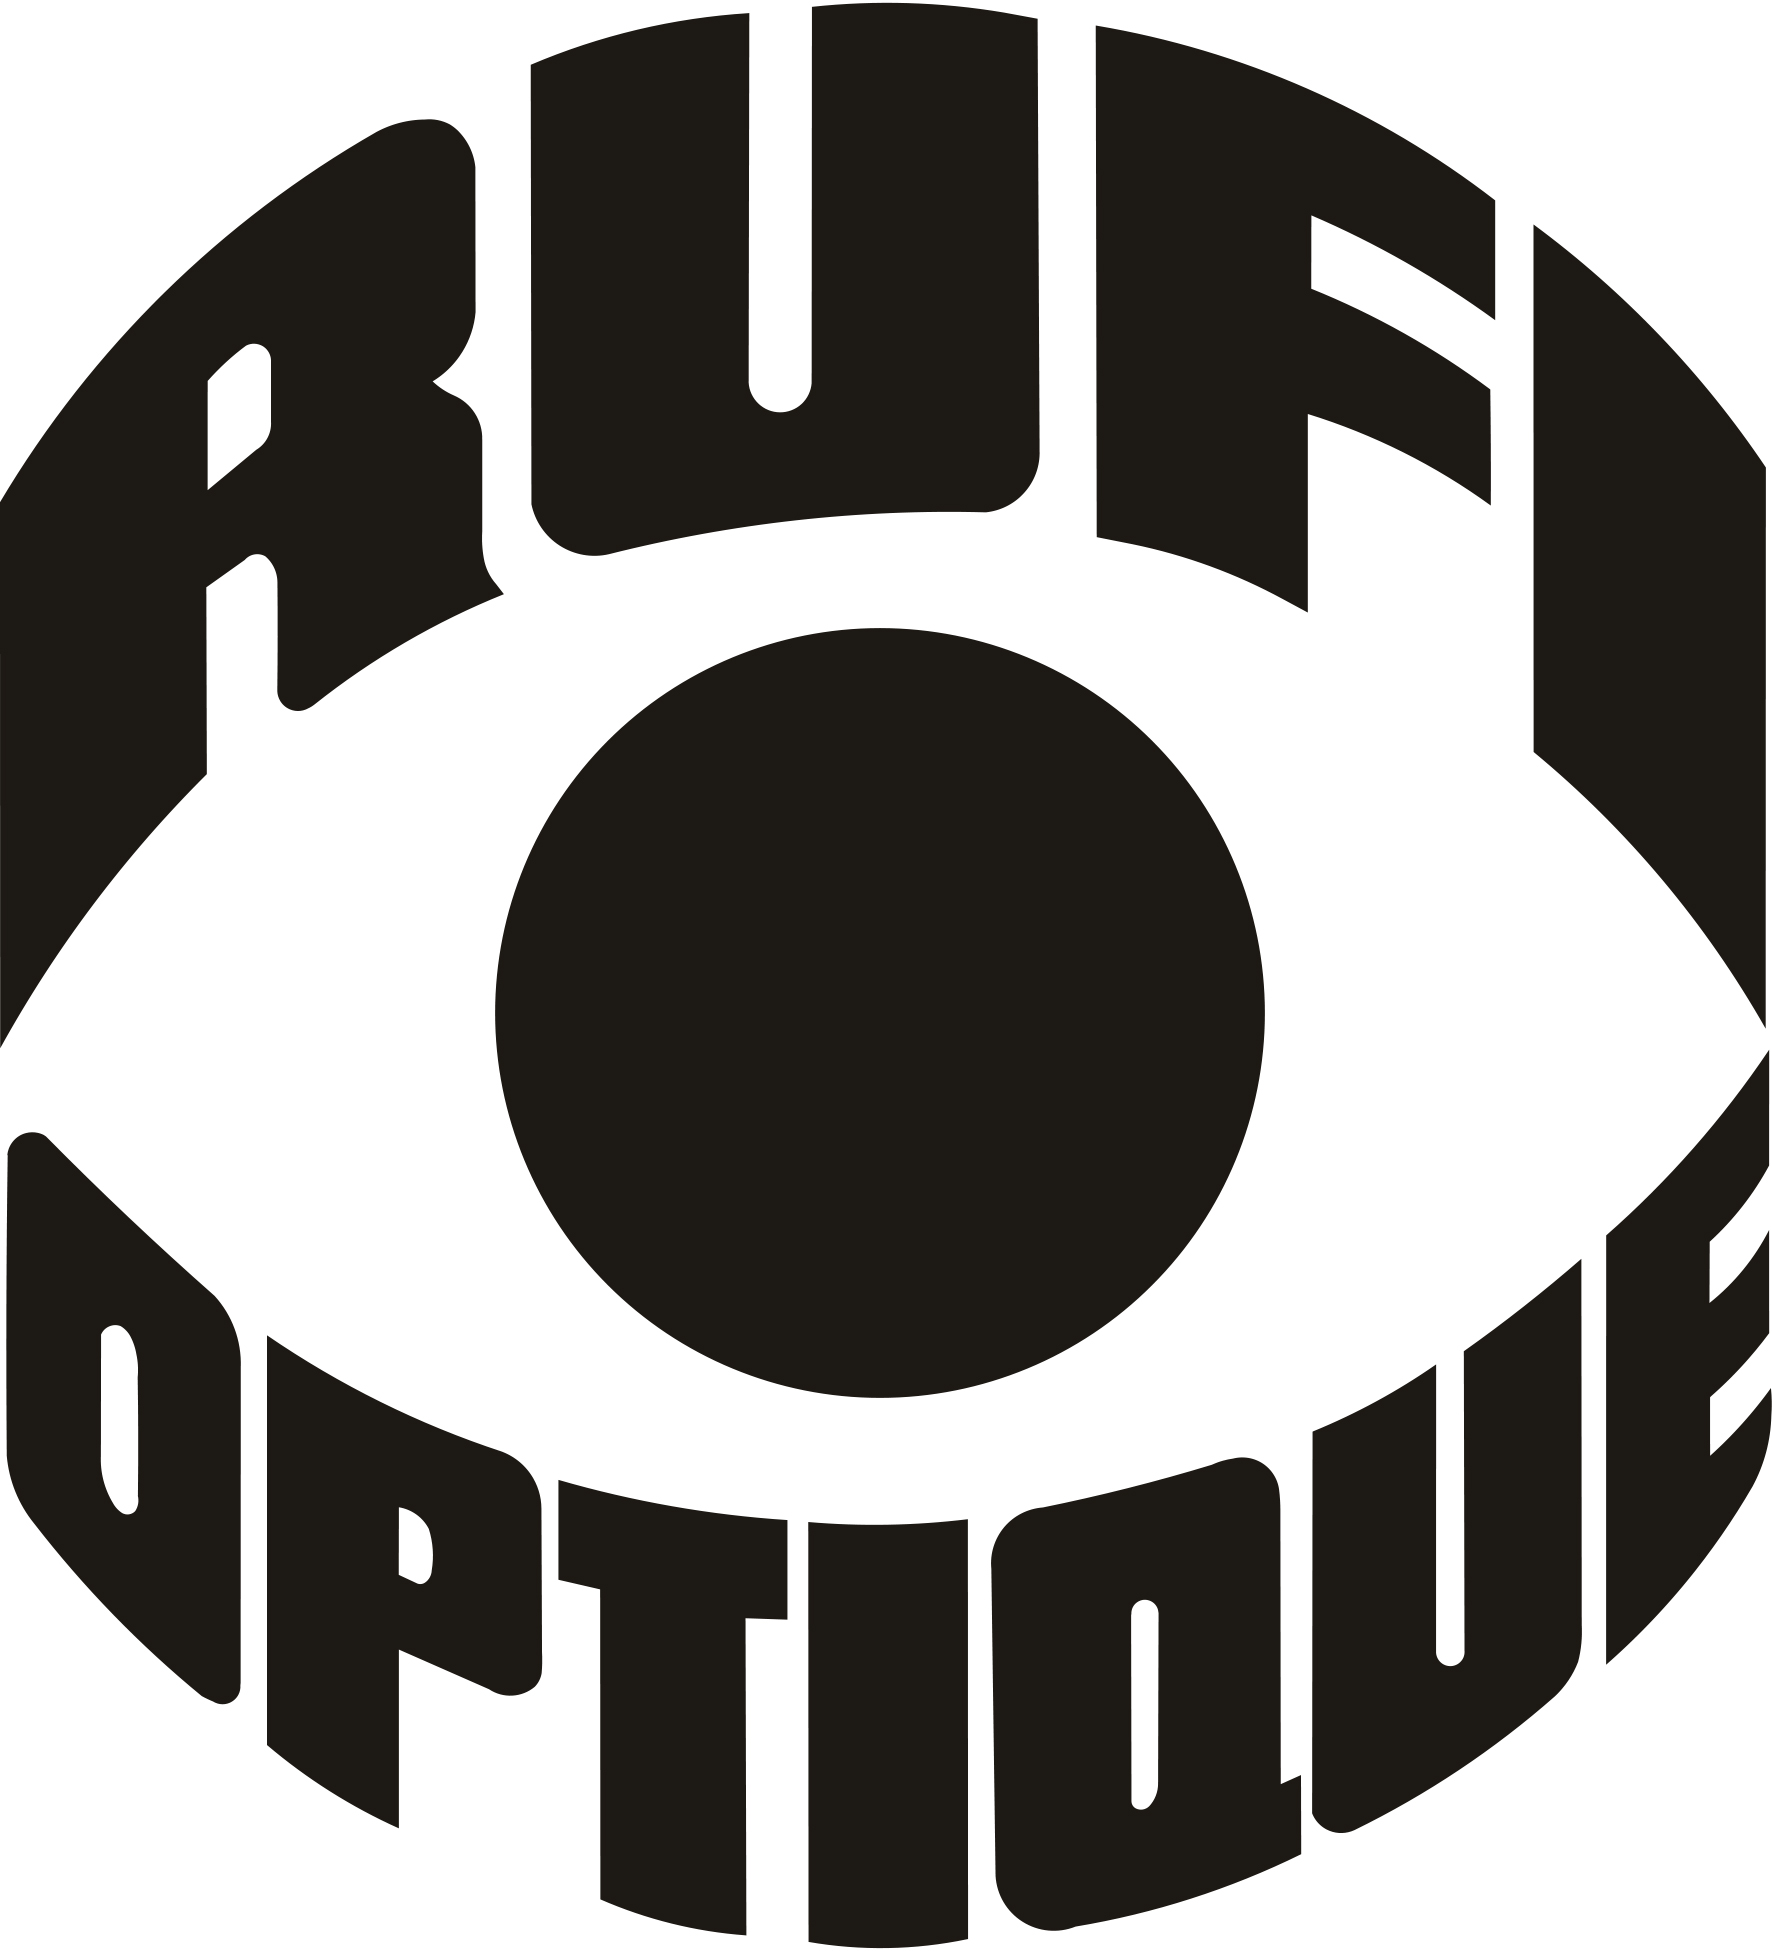 Rufi Optique